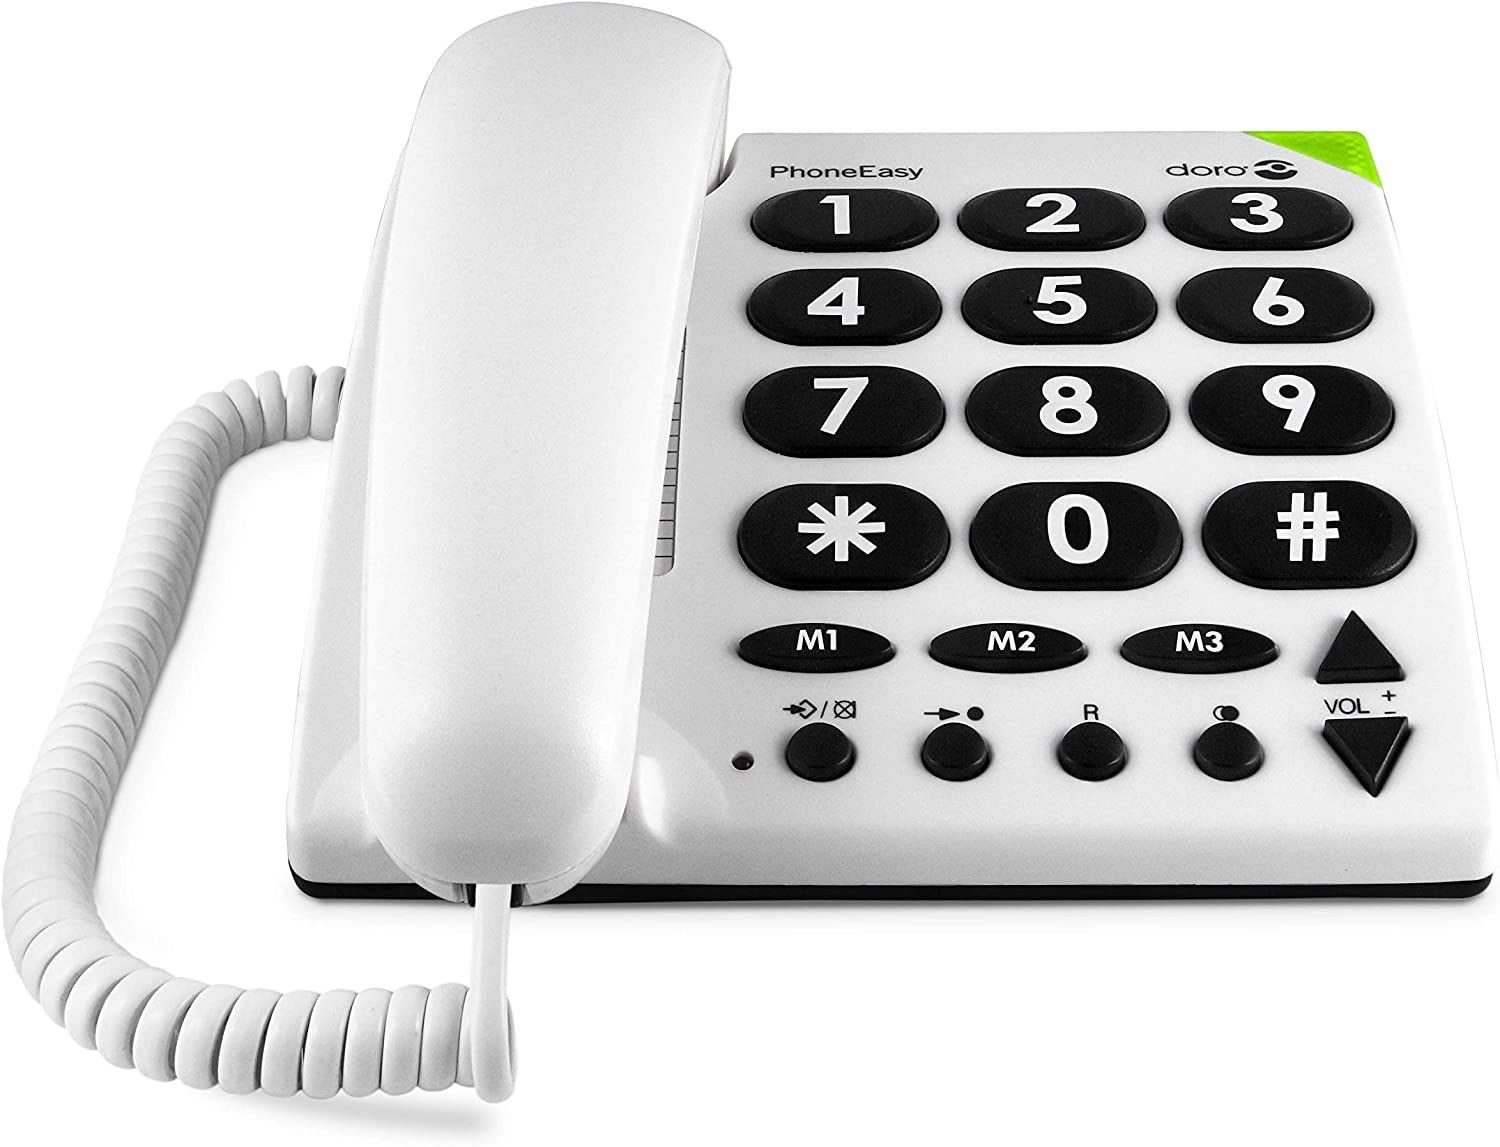 Doro PhoneEasy 311c Großtastentelefon (Hörgerätekompatibilität)